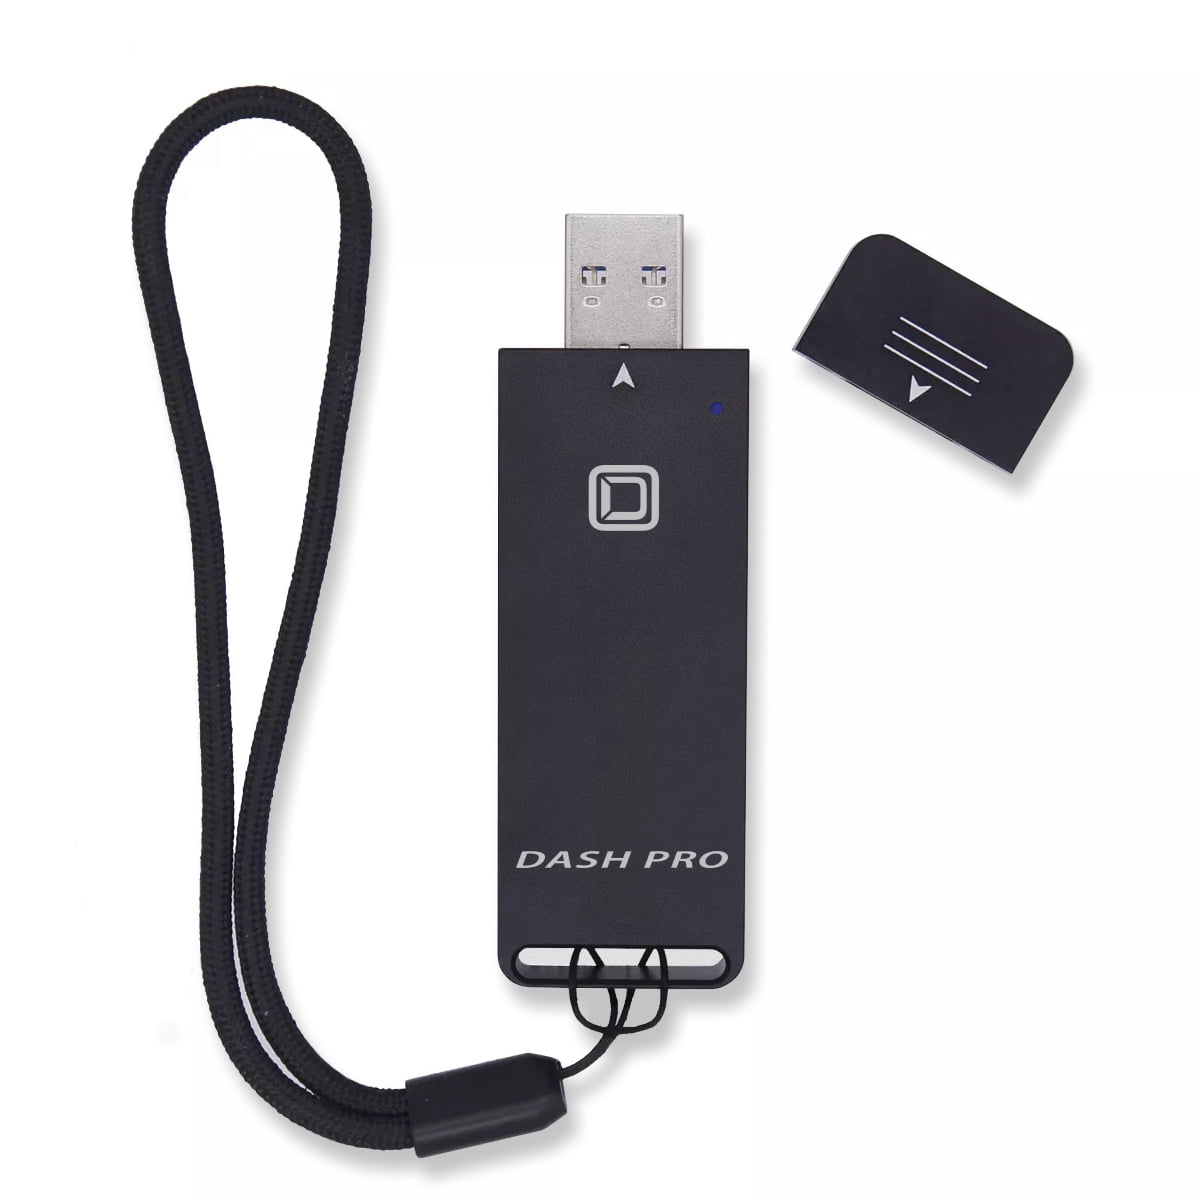 Sony Memory Stick® PRO Duo™ (2GB) Digital storage media at Crutchfield